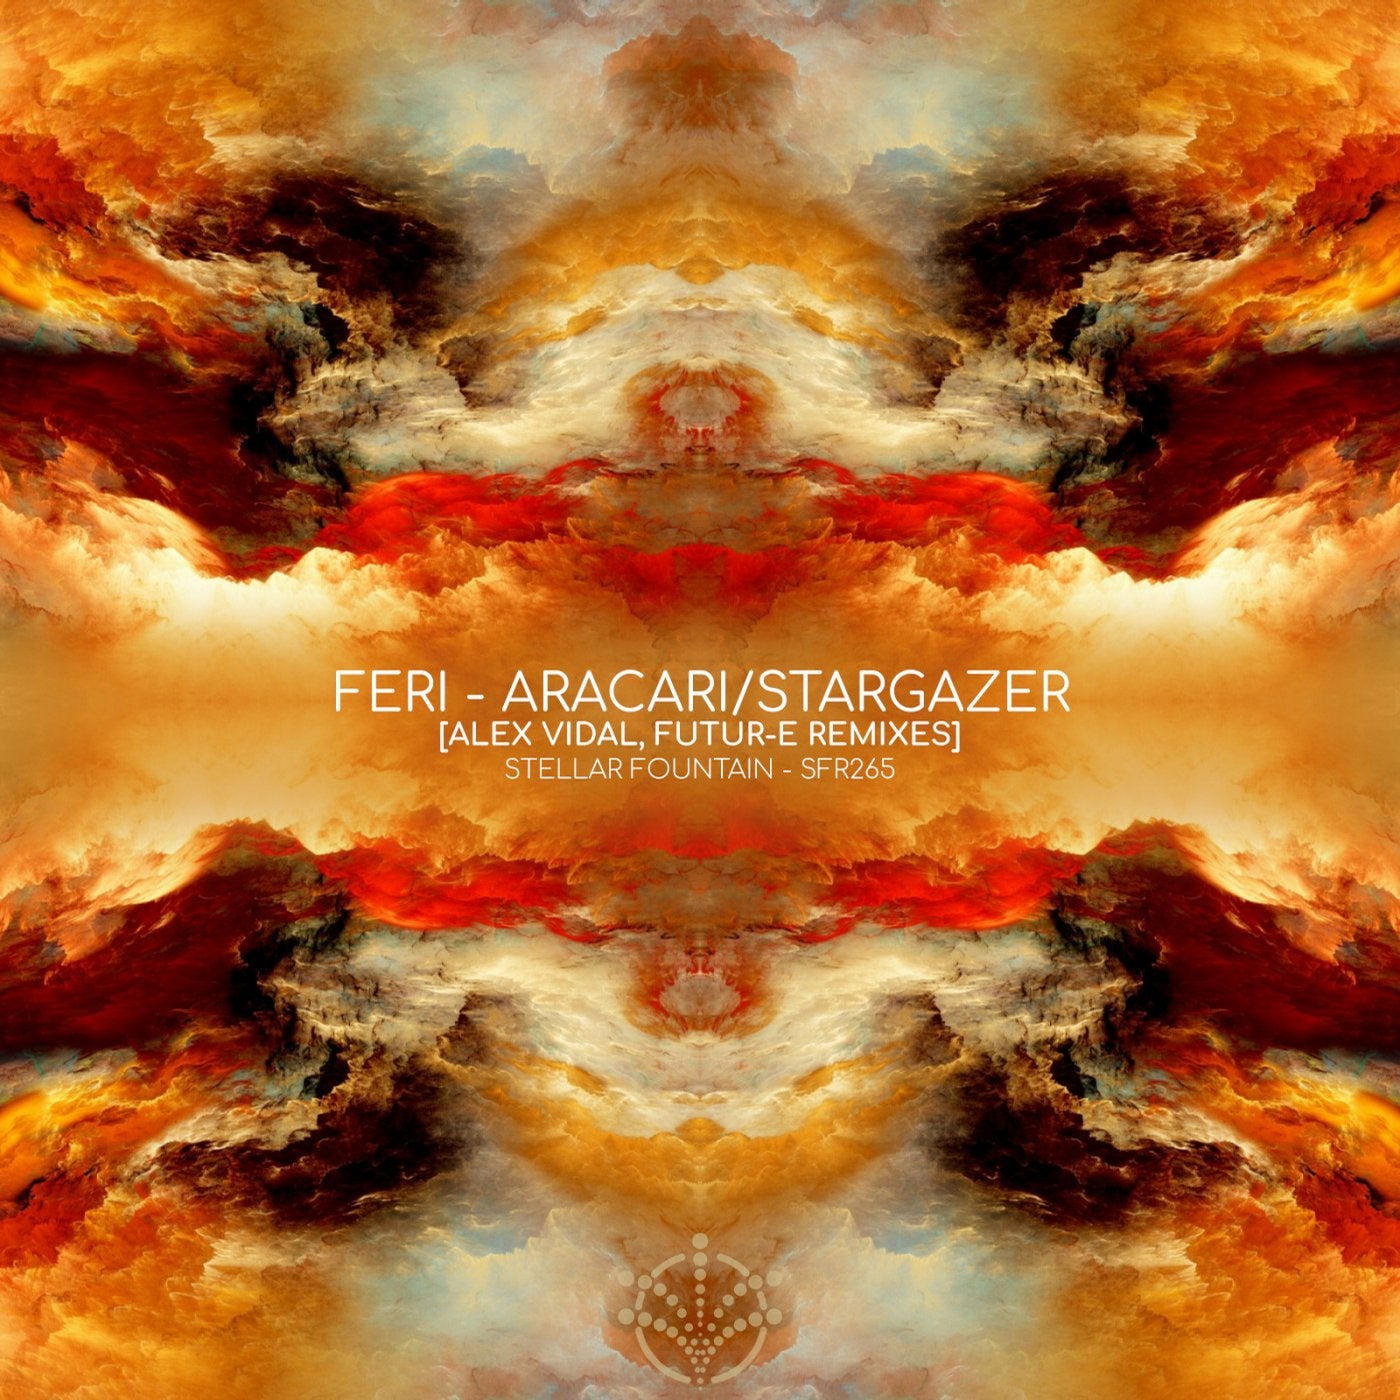 Aracari/Stargazer